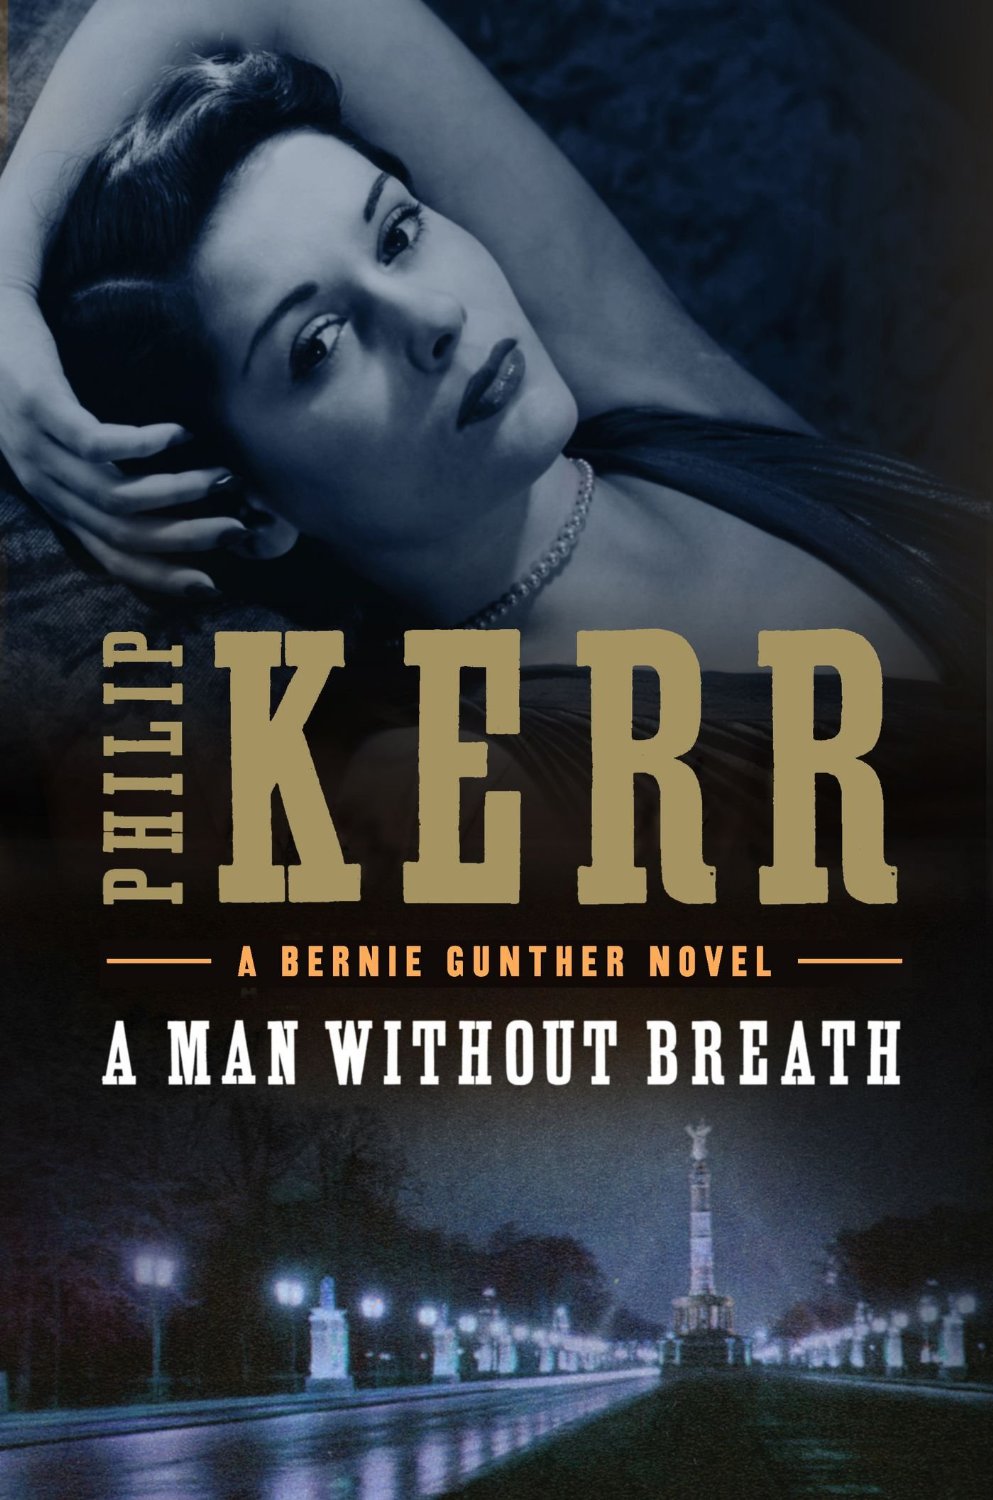 DBT #0159: Philip Kerr – A Man Without Breath (the 9th Bernie Gunther novel)